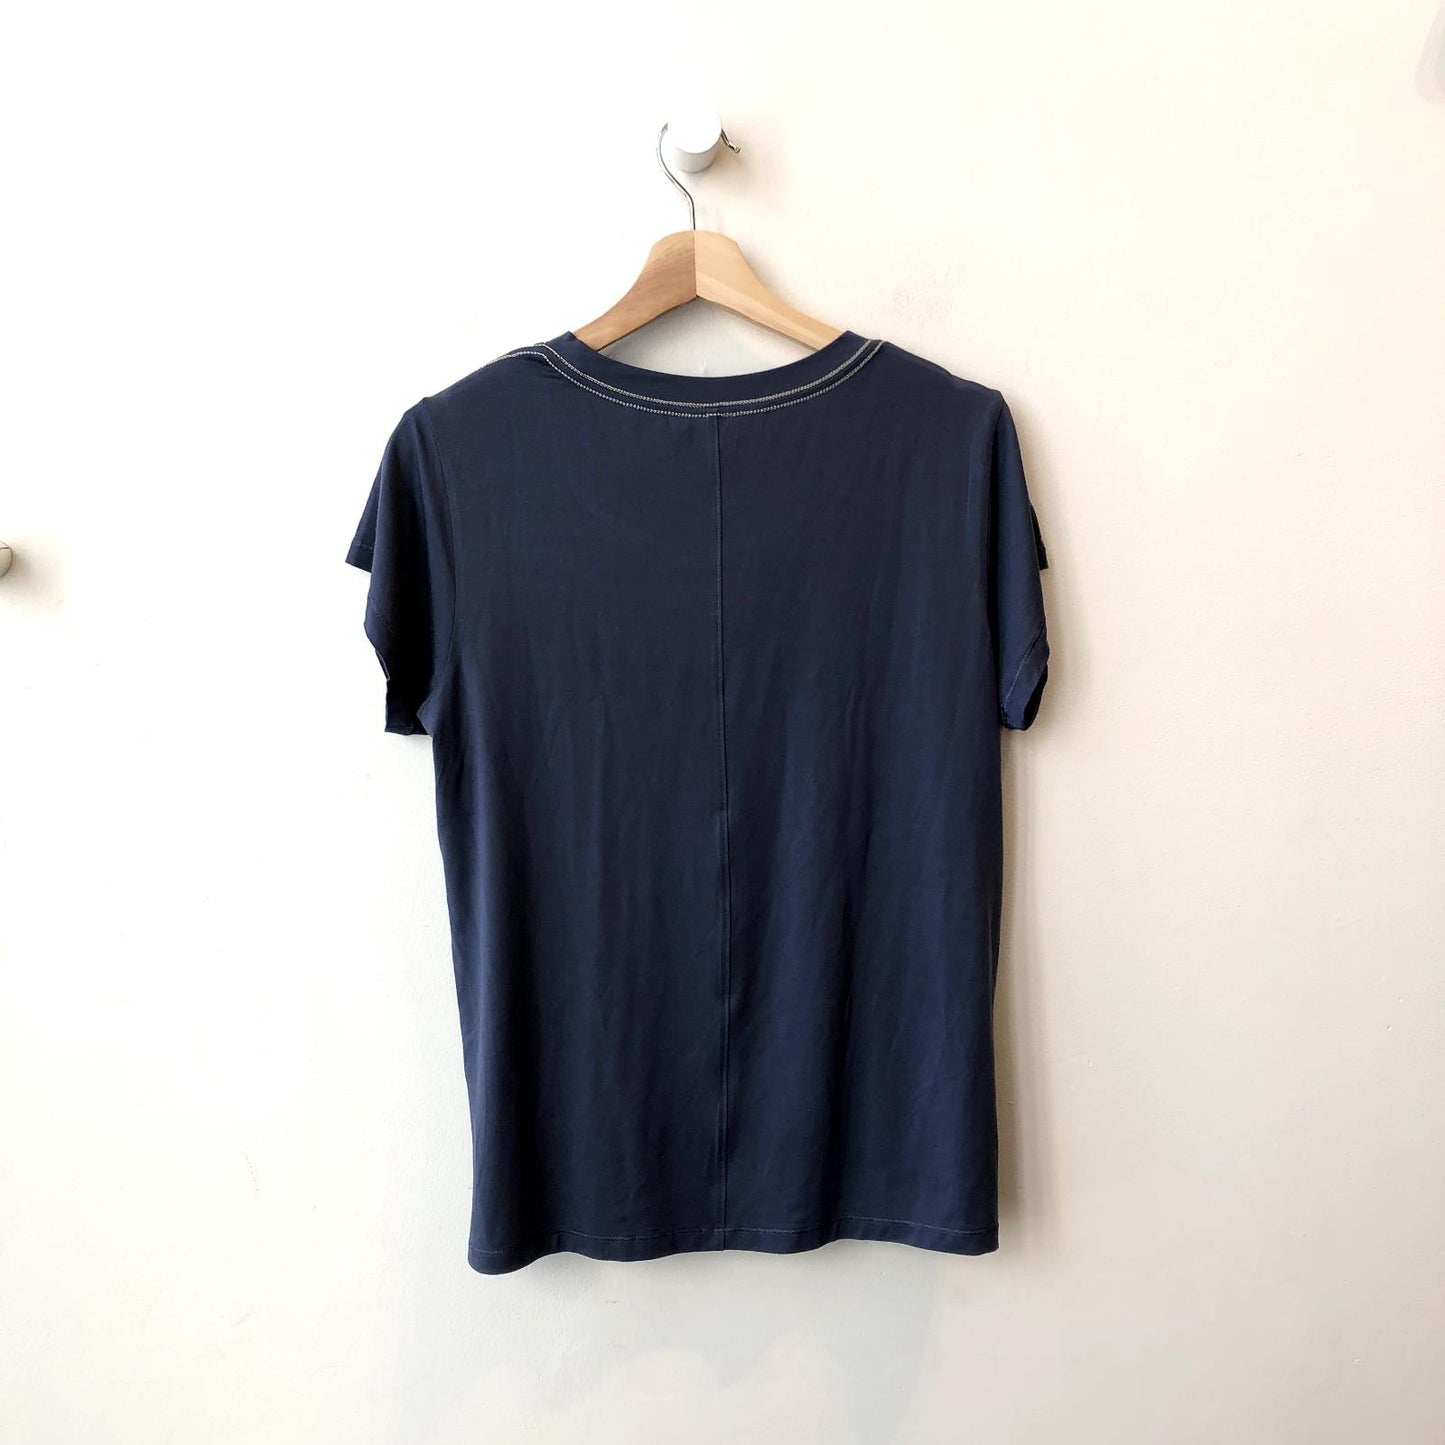 M - Label + Thread Dark Muted Blue Short Sleeve Soft Shirt Top NEW 4427SC